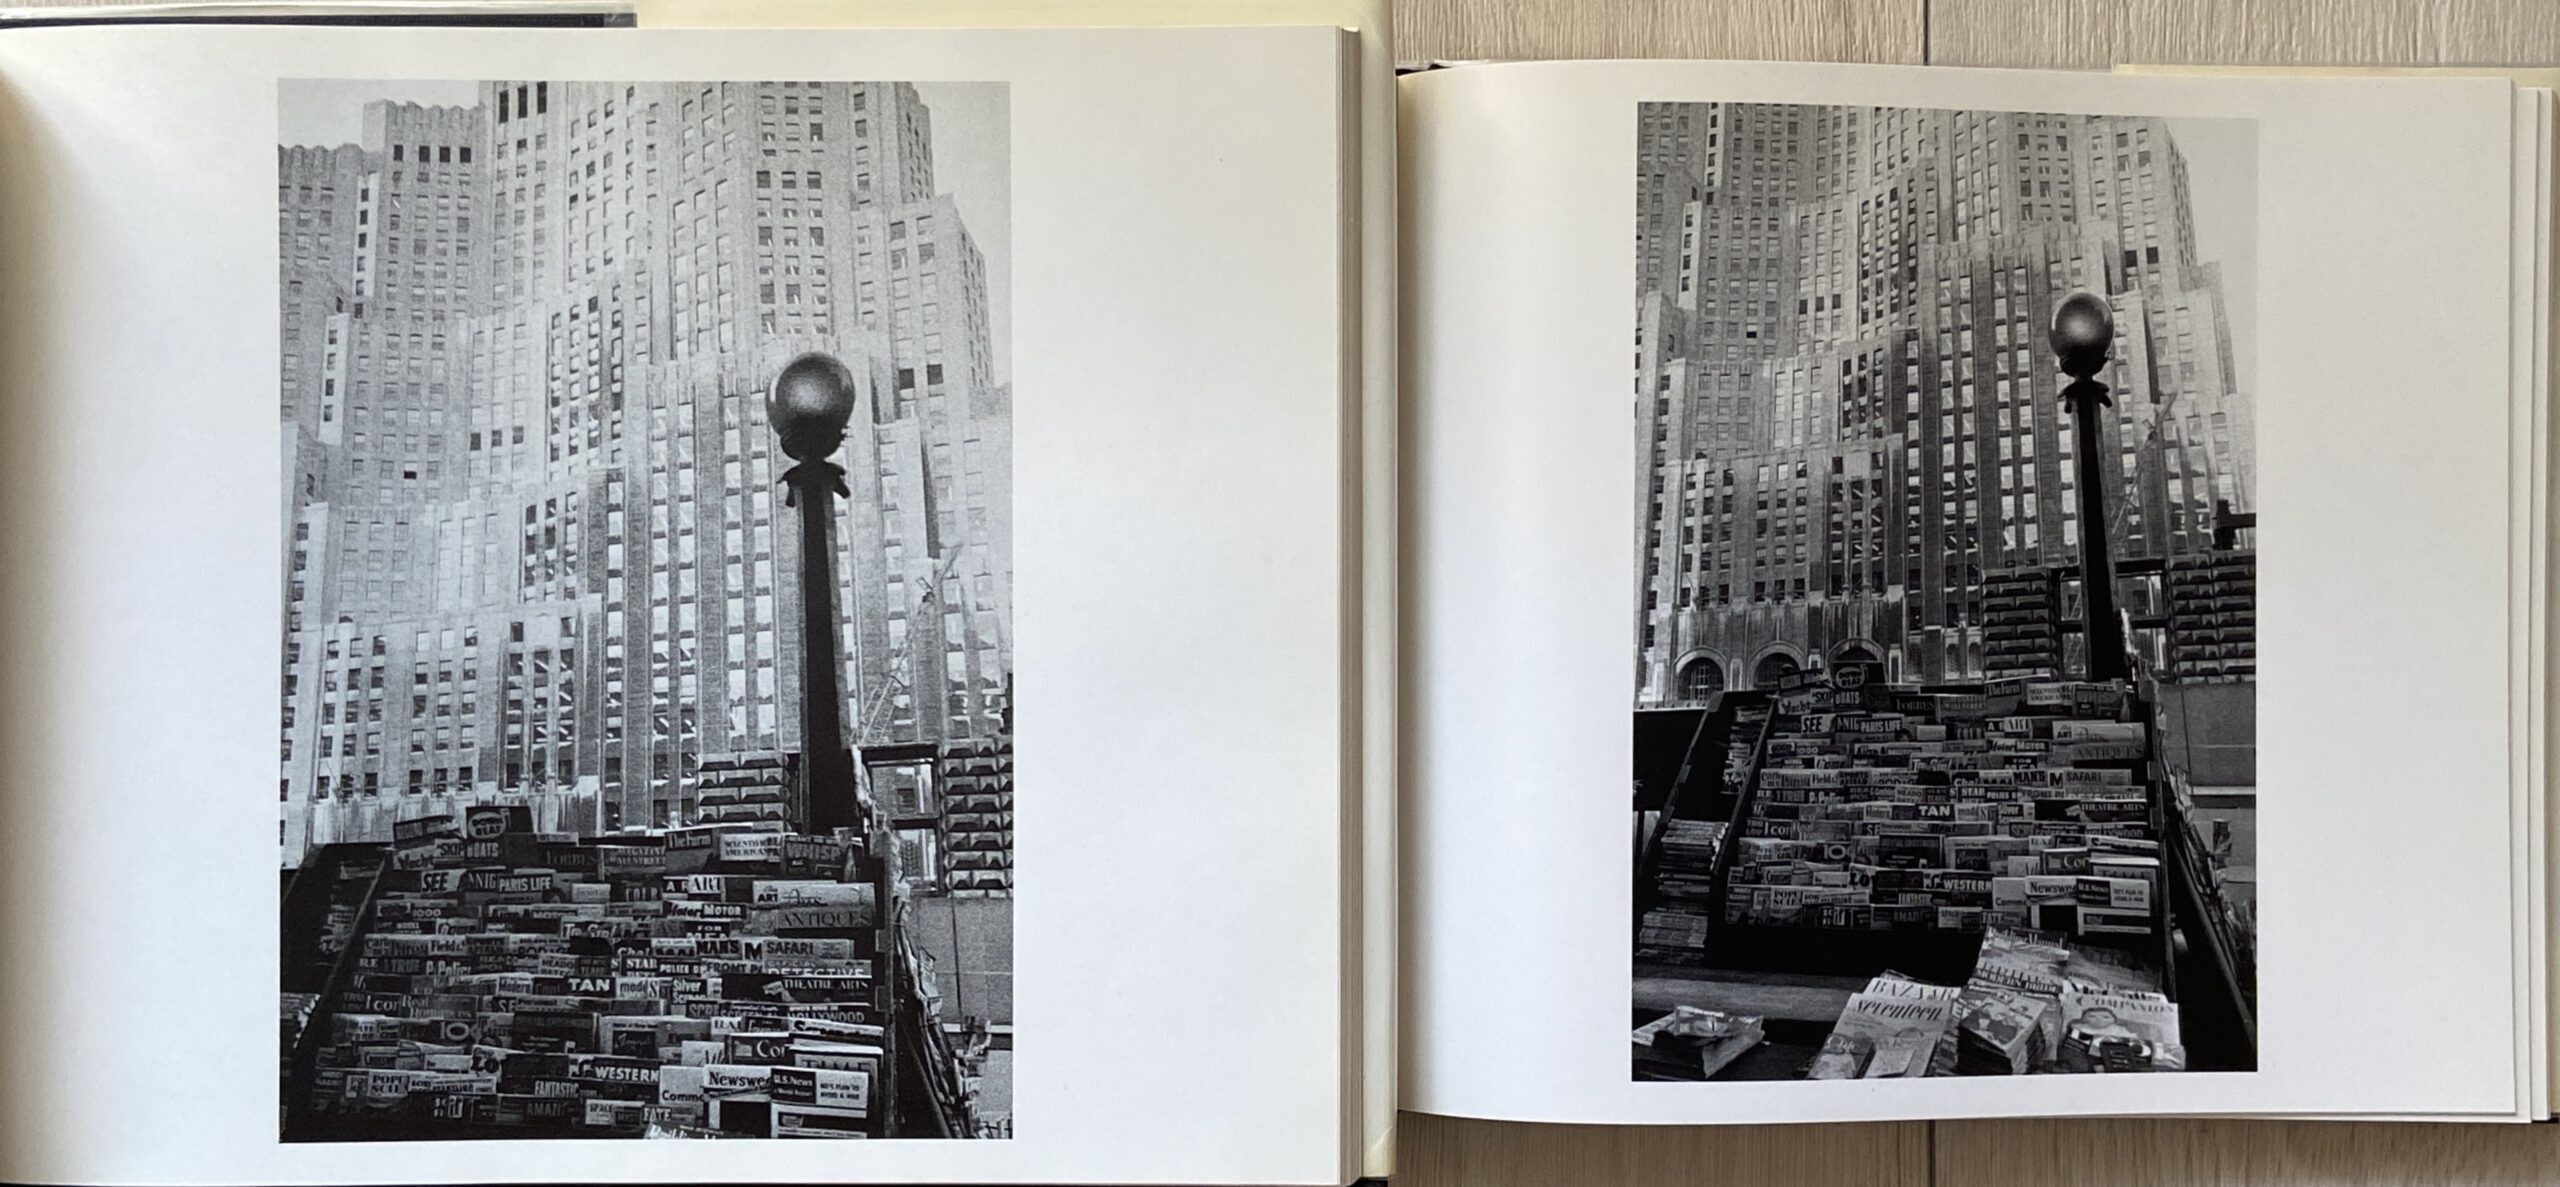 Editions of 'The Americans' [Robert Frank] – TOSHIAKI OTSUKI